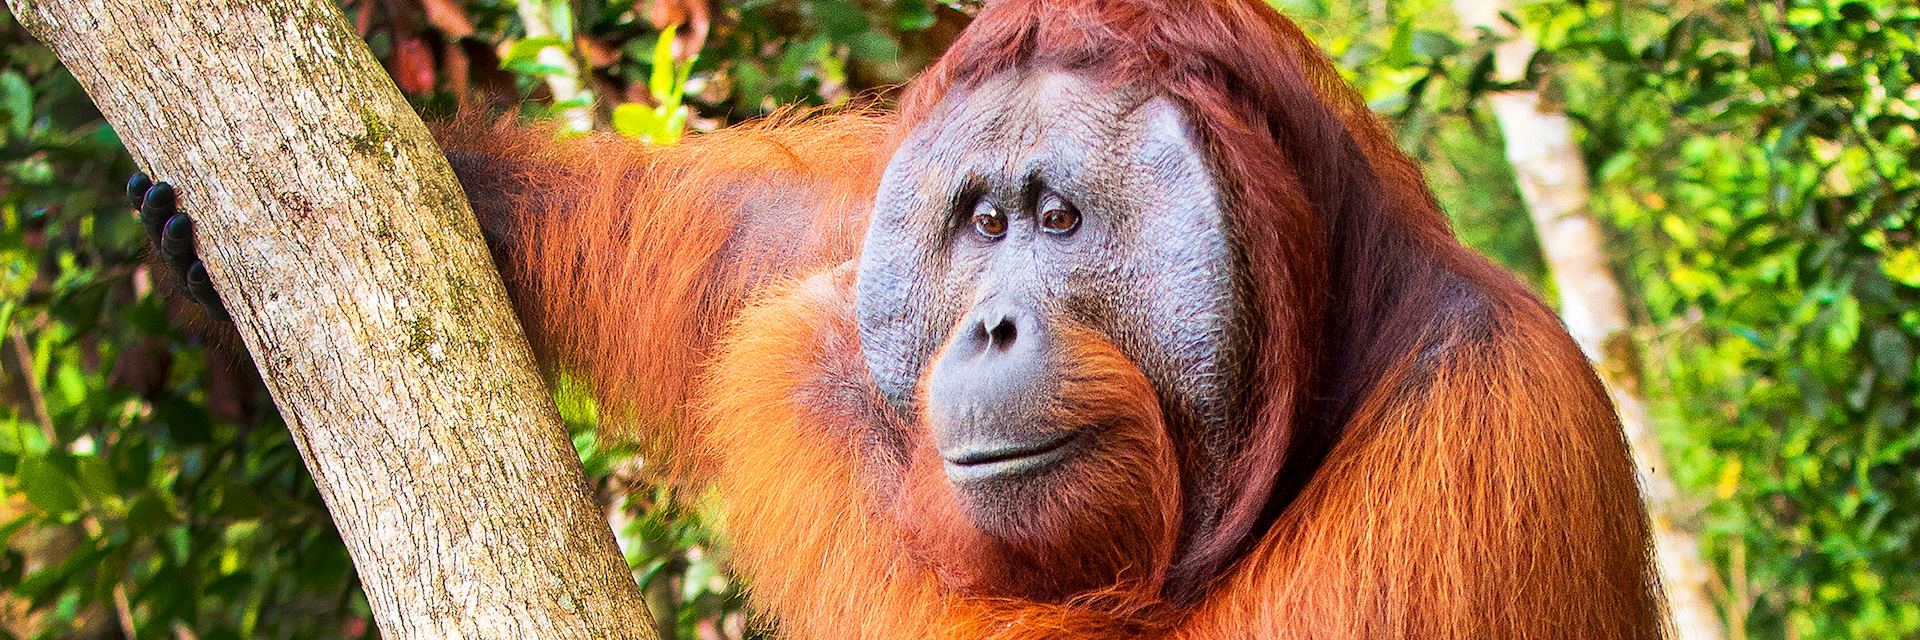 Orangutan in Kalimantan